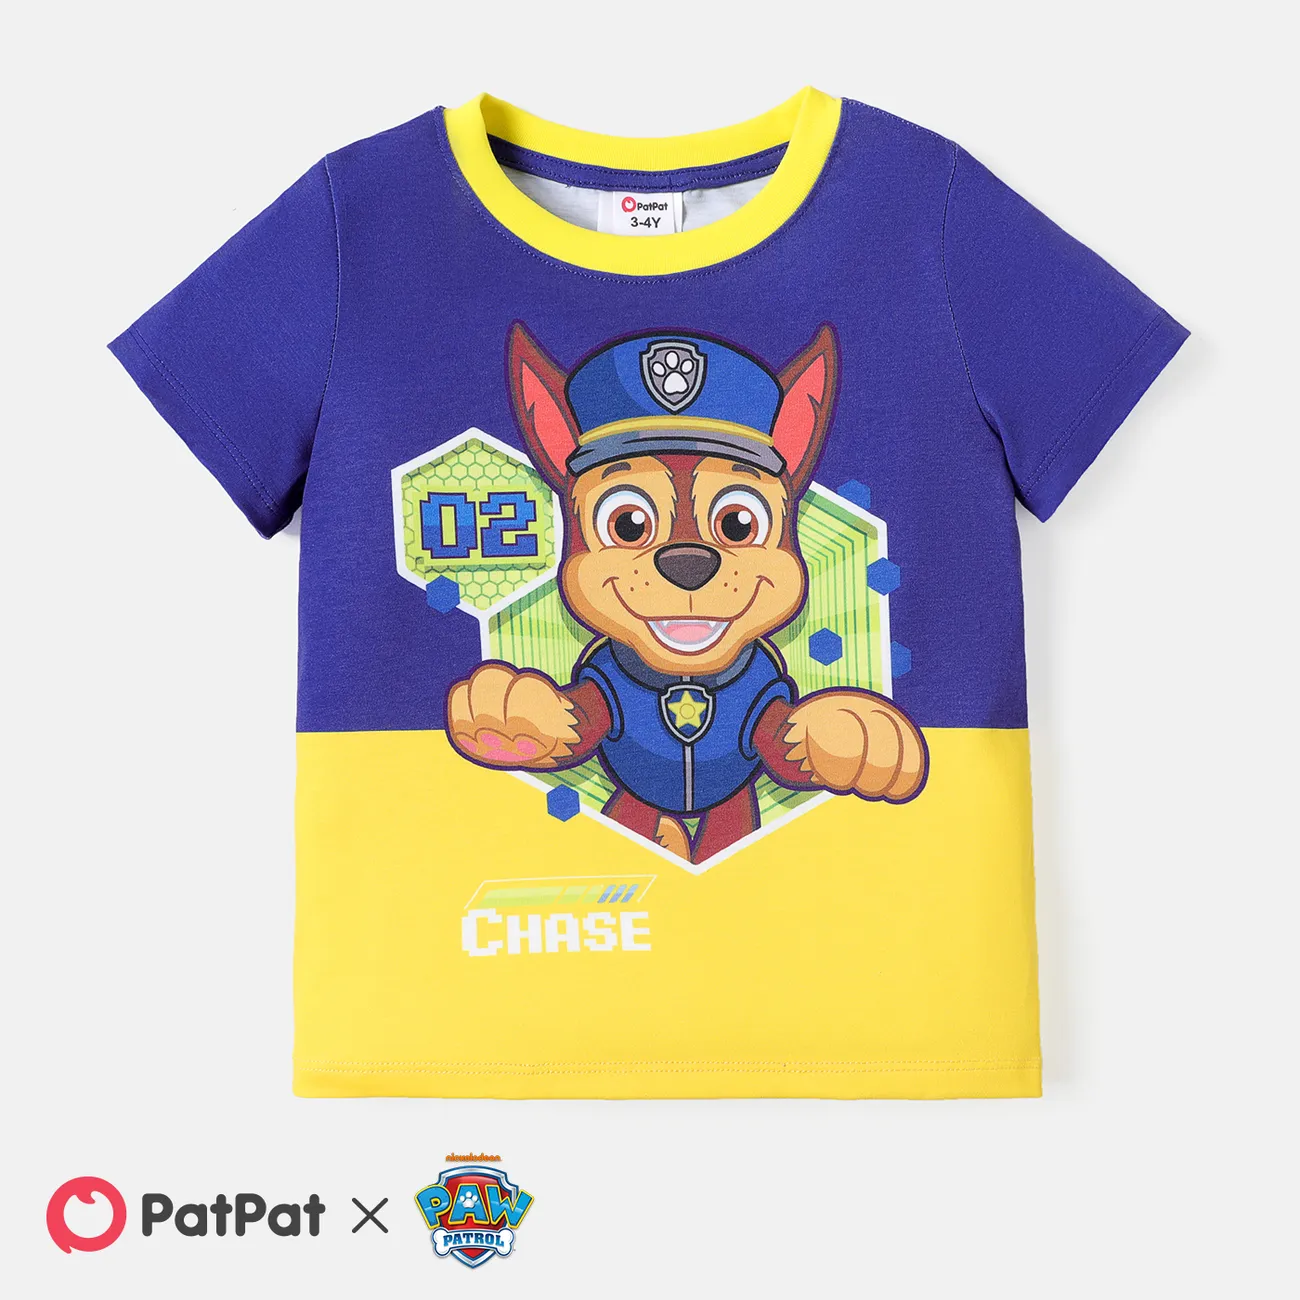 PAW Patrol Toddler Gir/Boy Colorblock Short-sleeve Tee  big image 1